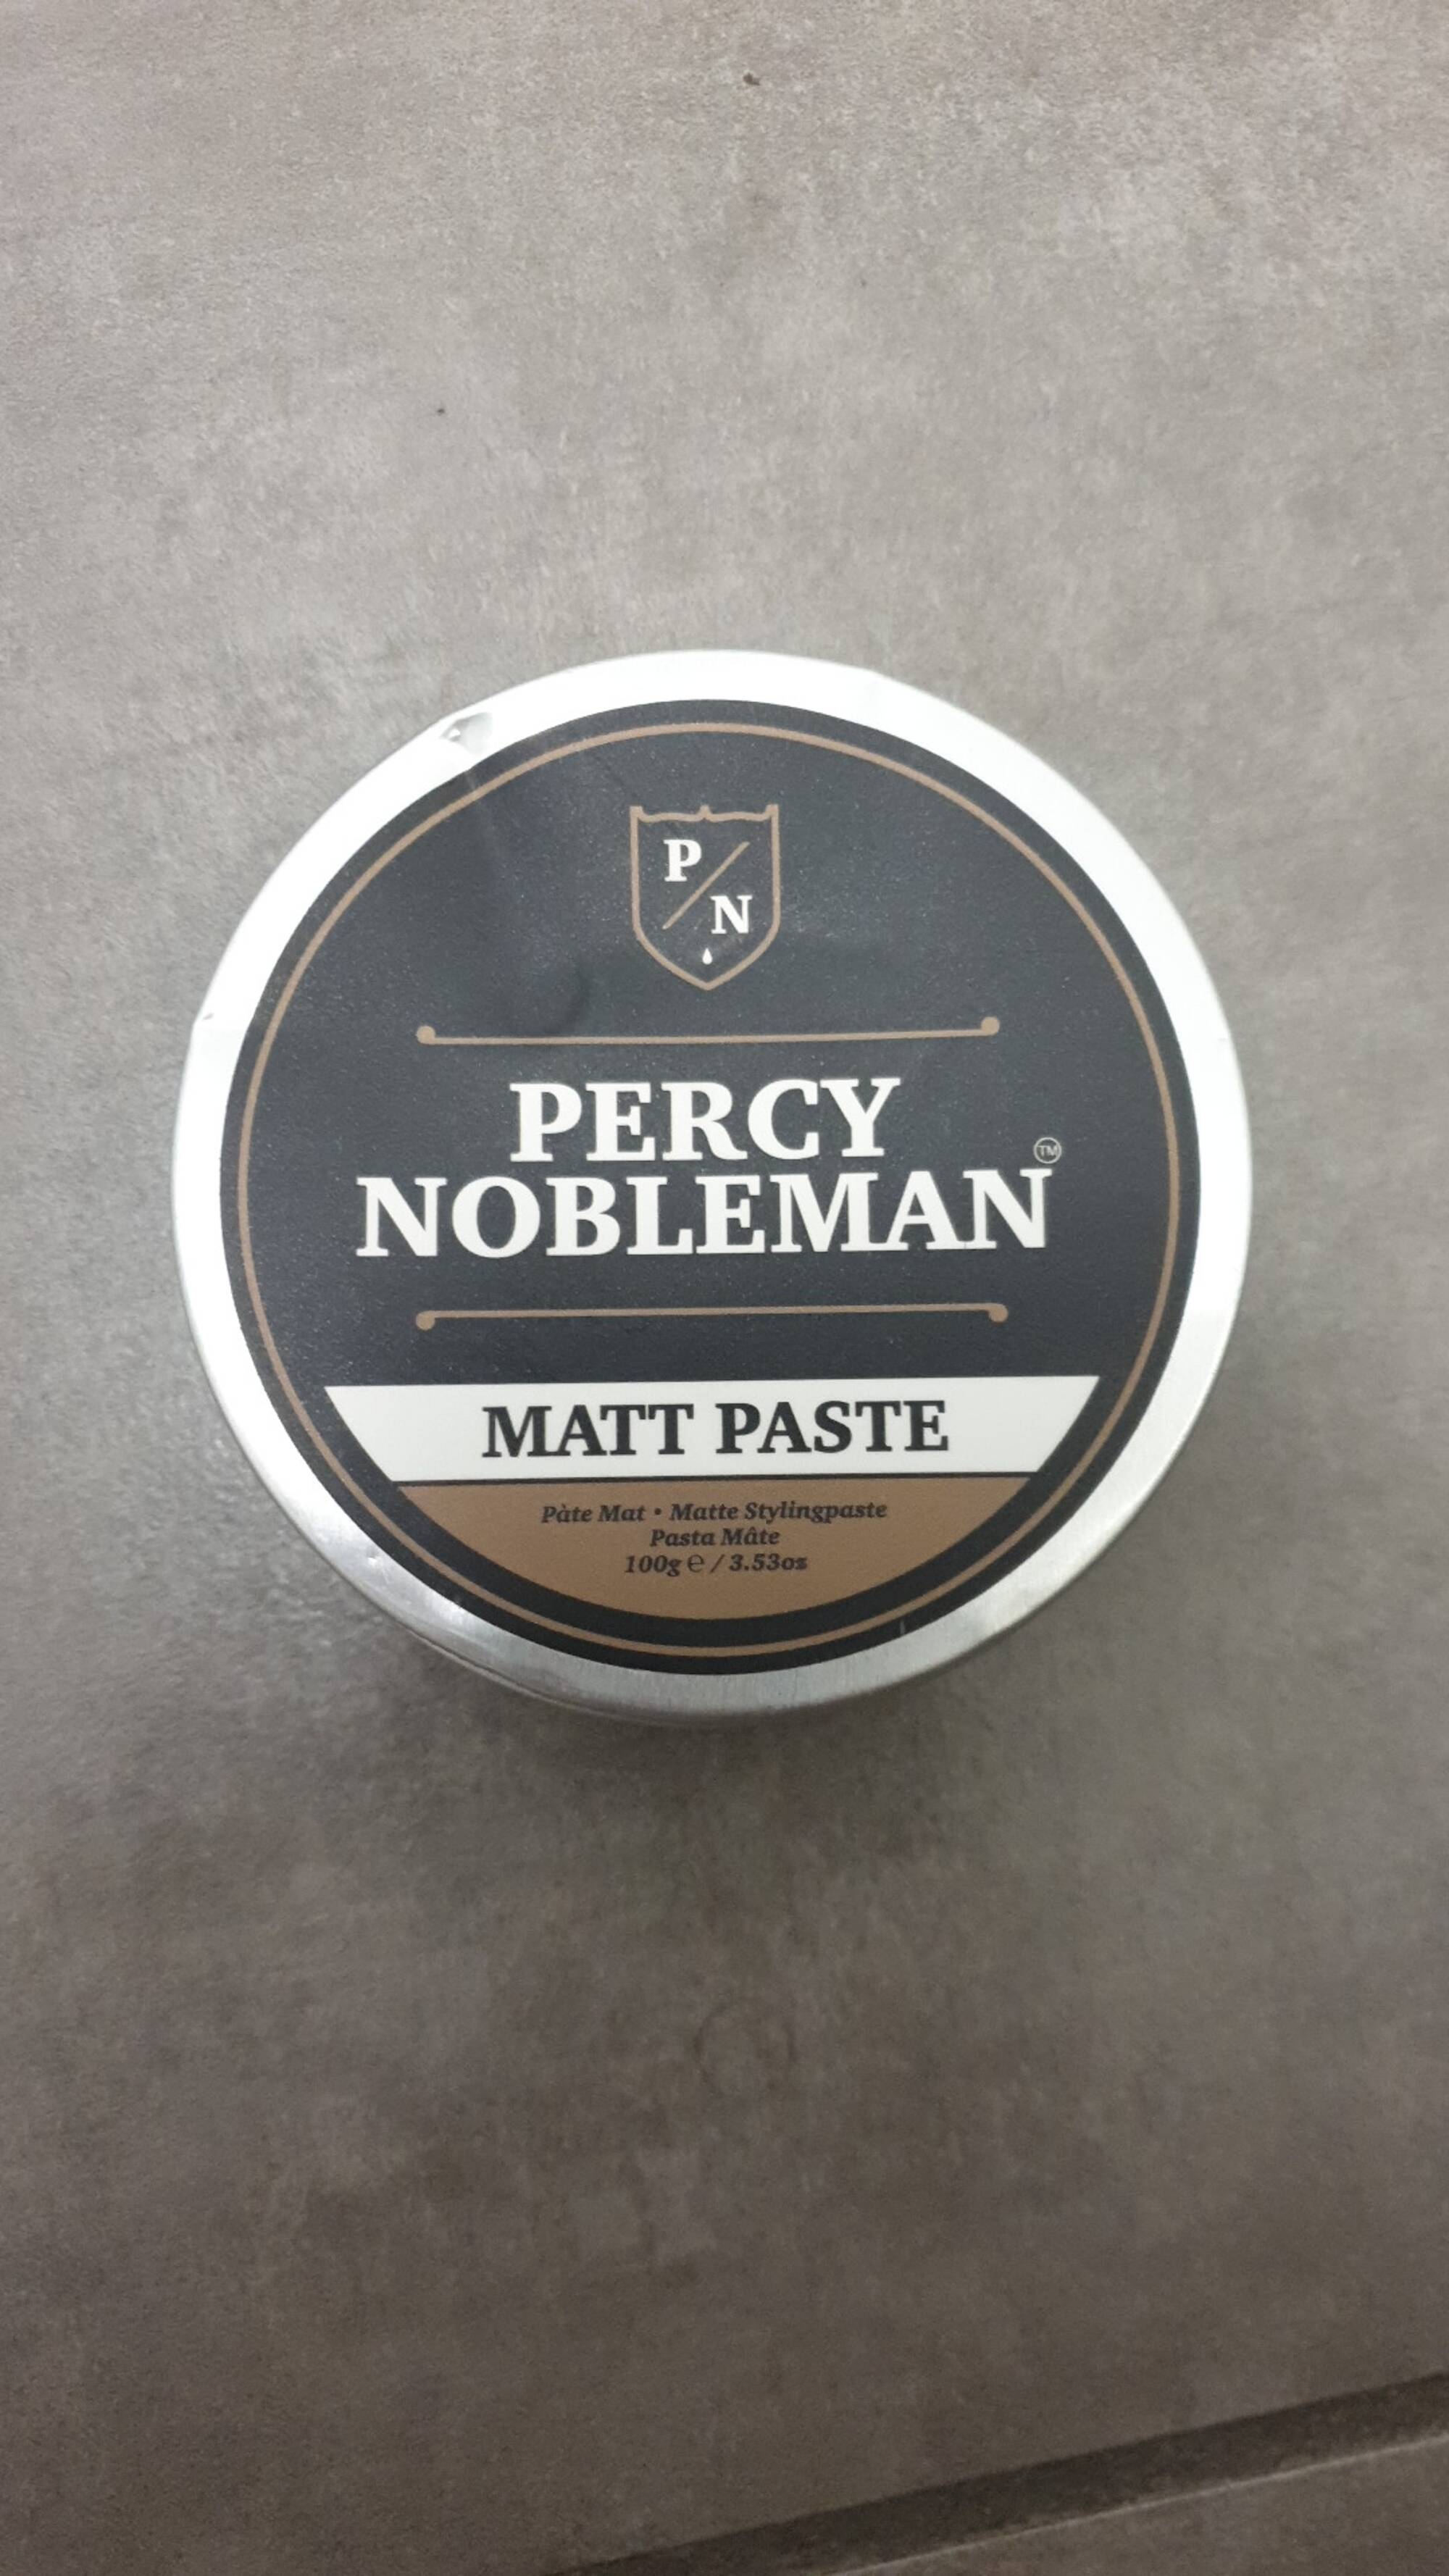 PERCY NOBLEMAN - Matt paste